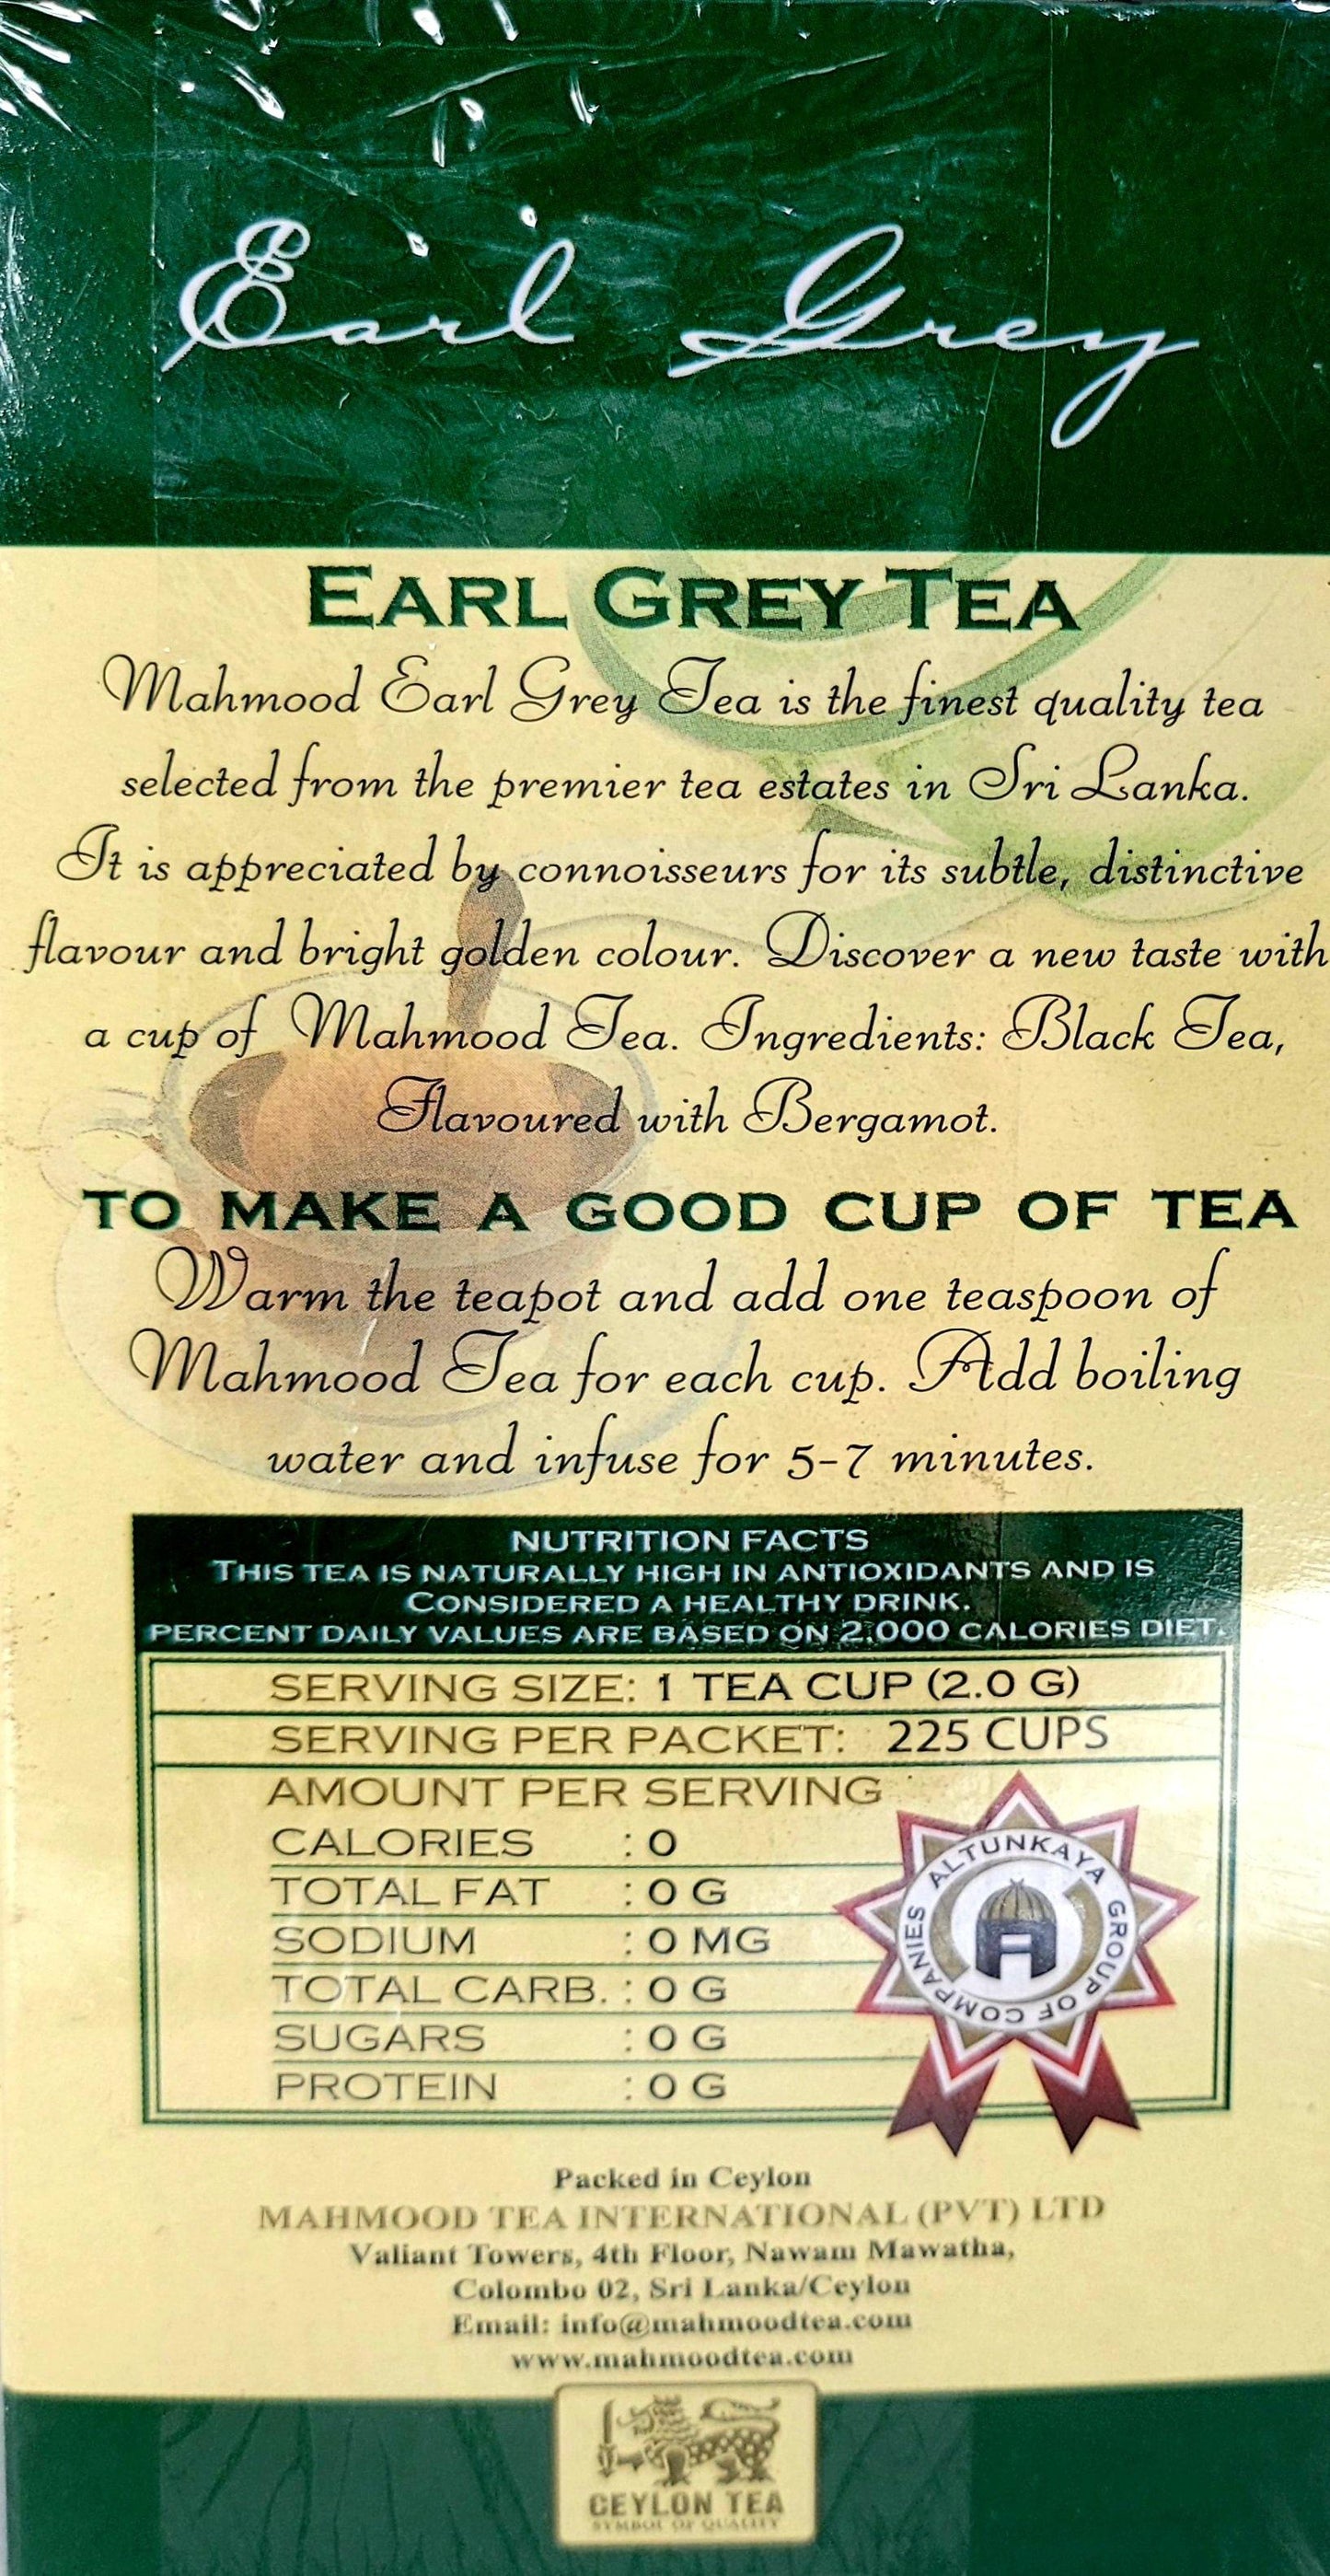 Mahmood Tea Earl Gray Tea Dissolve - Arabian Shopping Zone